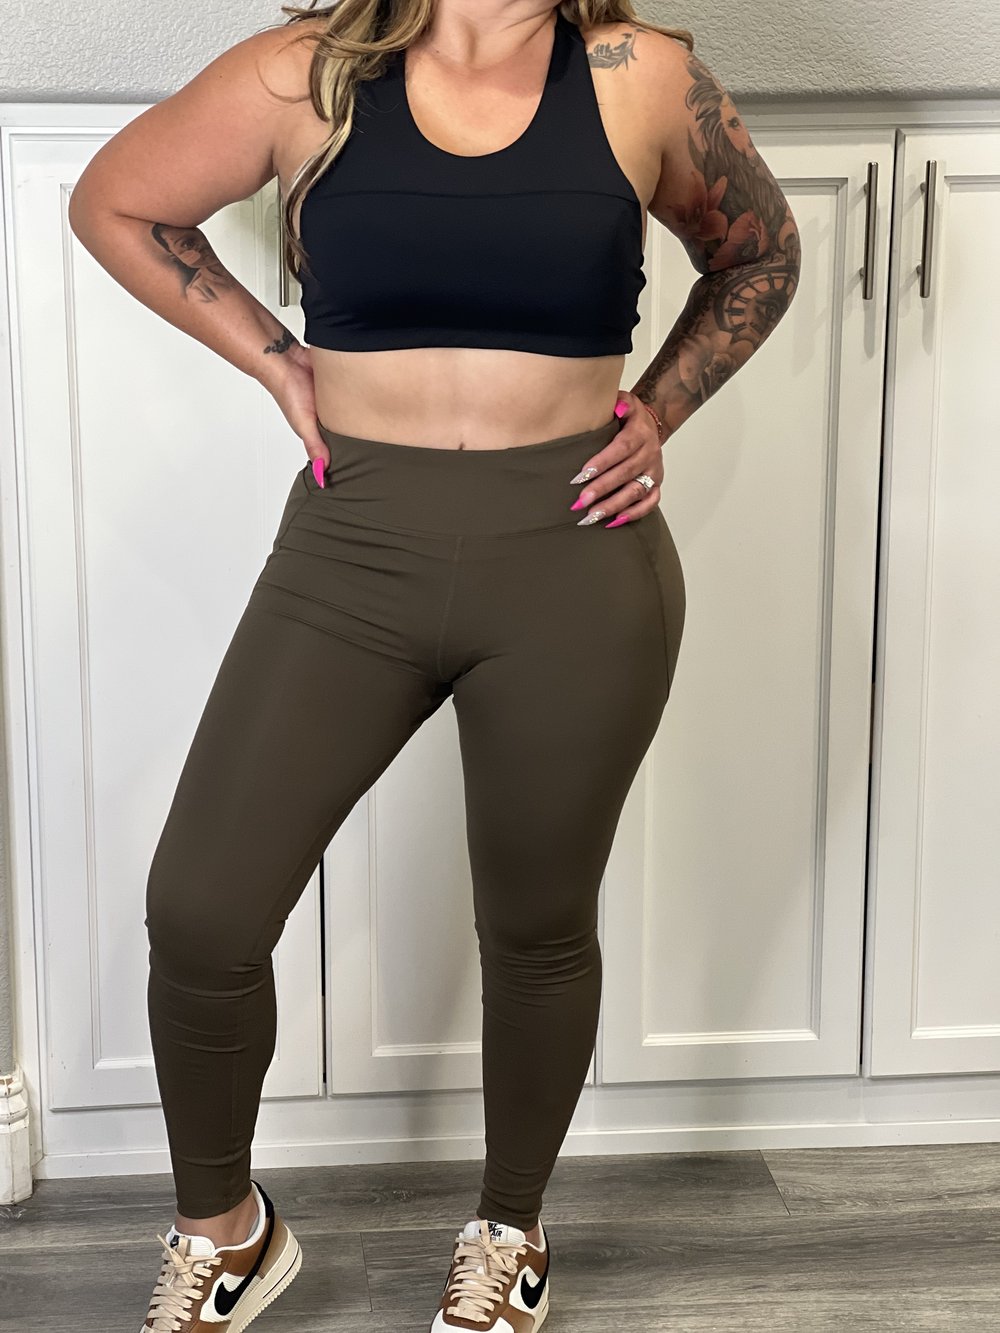 Booty-Pop High Waisted leggings — Cali Luvs Curves